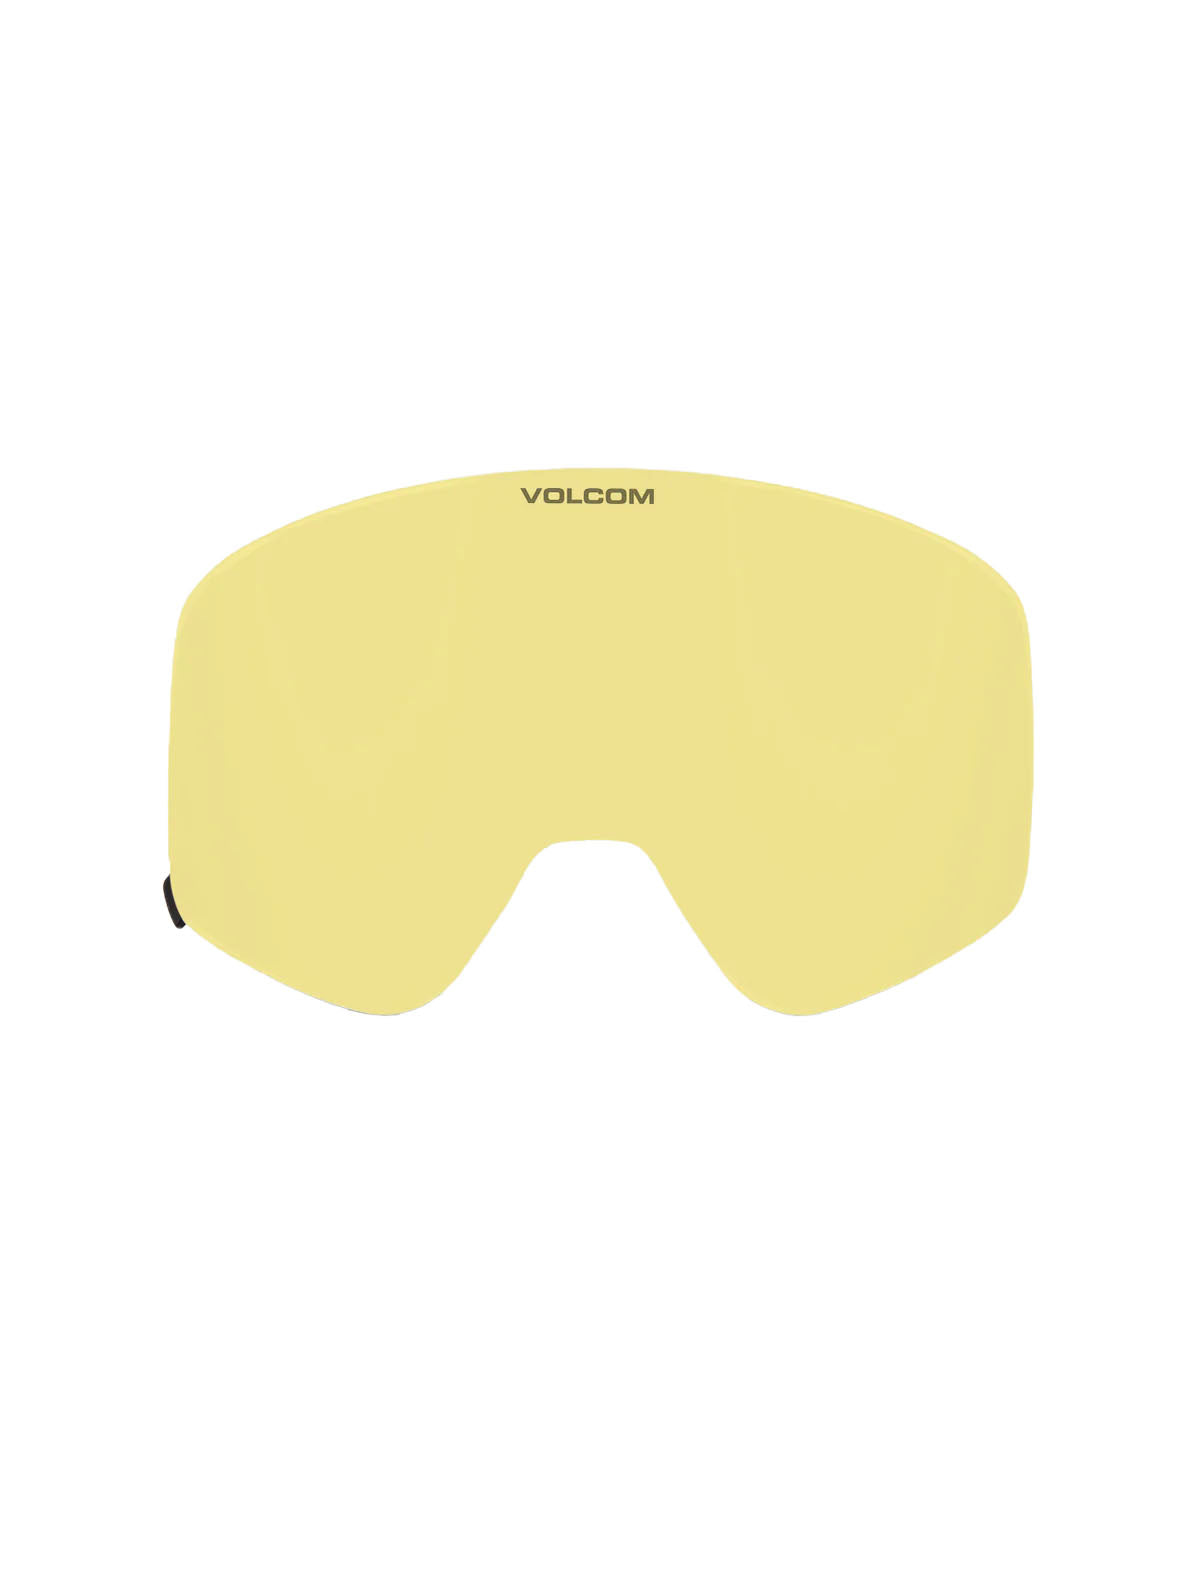 Volcom Odyssey Goggle Matte White/Pink Chrome + Bonus Lens 2024